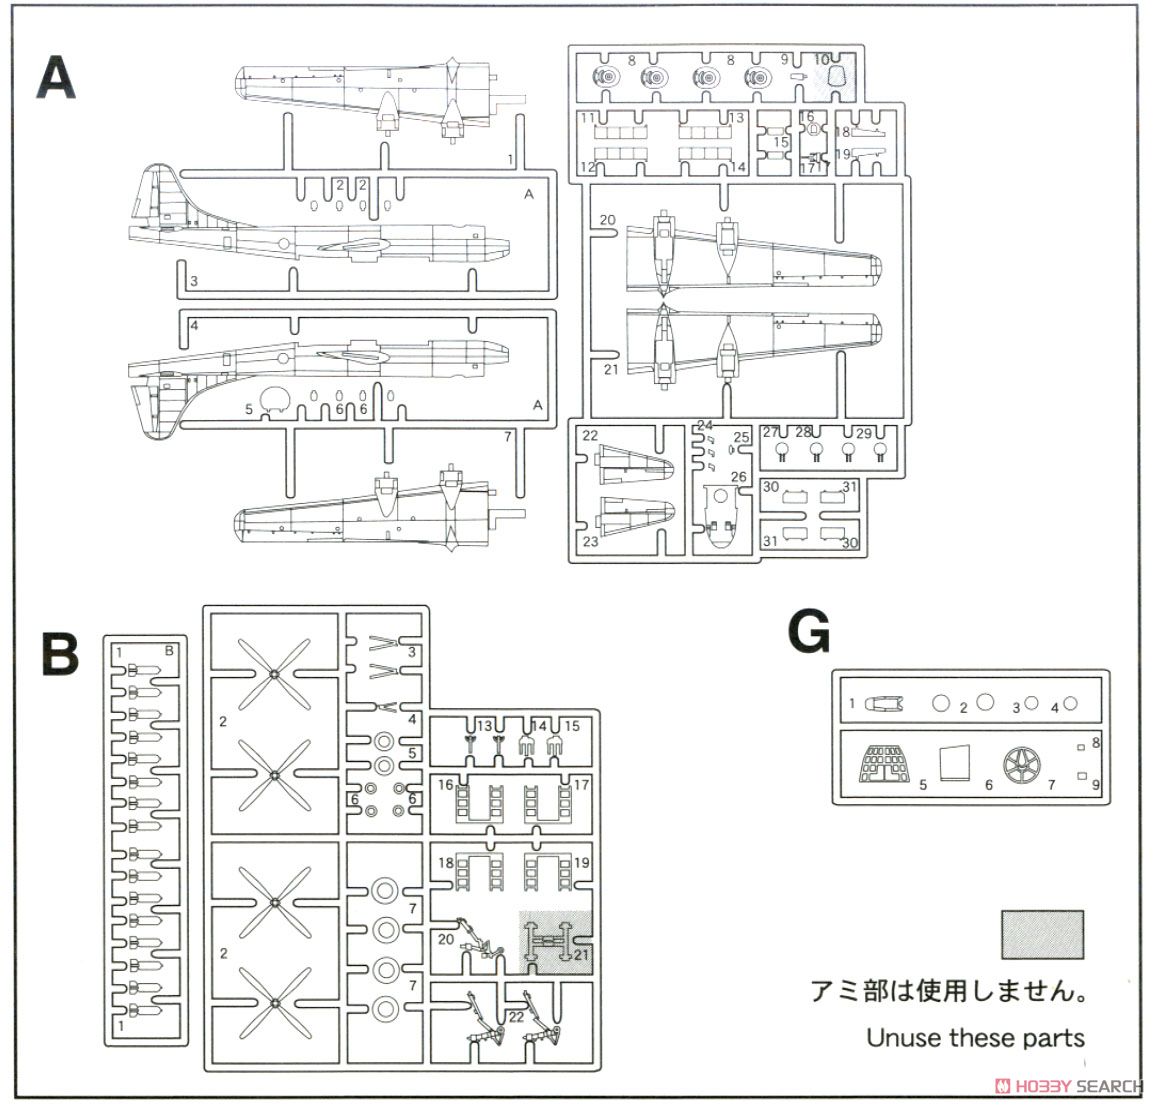 B-29 スーパーフォートレス 東京ローズ/ヘブンリー・レイデン (プラモデル) 設計図4